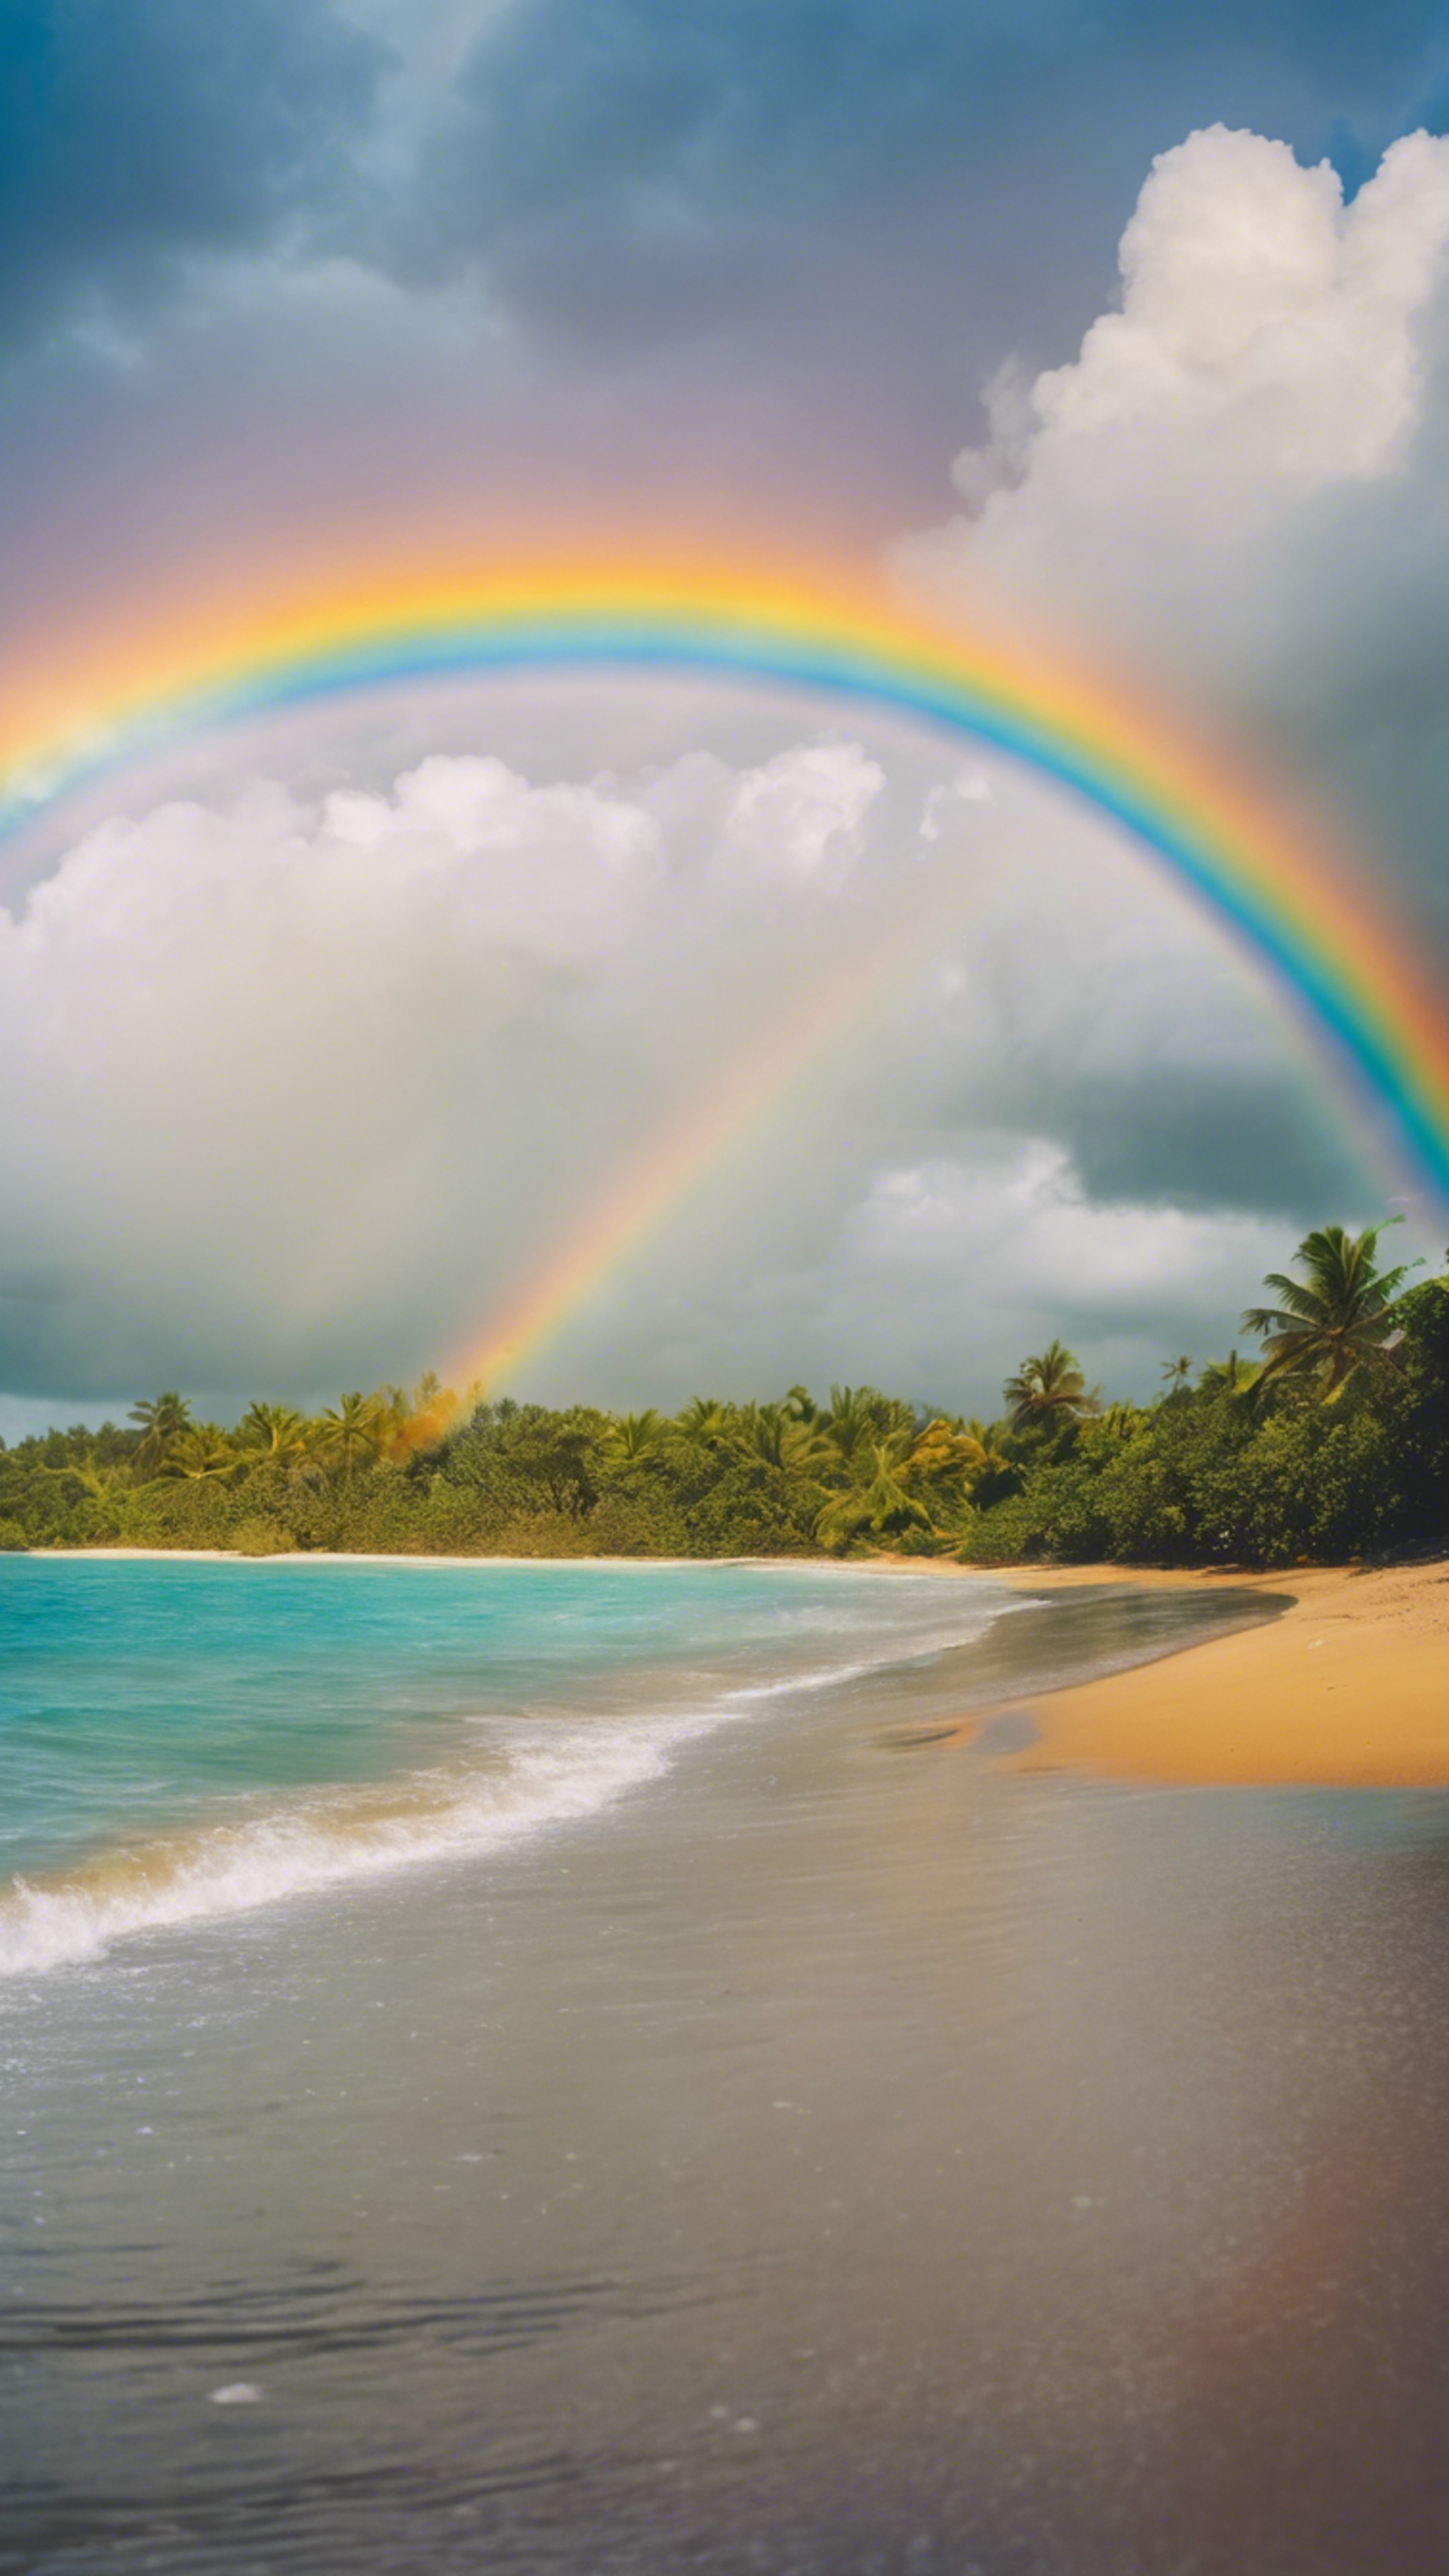 Vivid rainbow arcing across the sky after a rainfall at a tropical beach. Wallpaper[d3854ca165cf432a9c18]